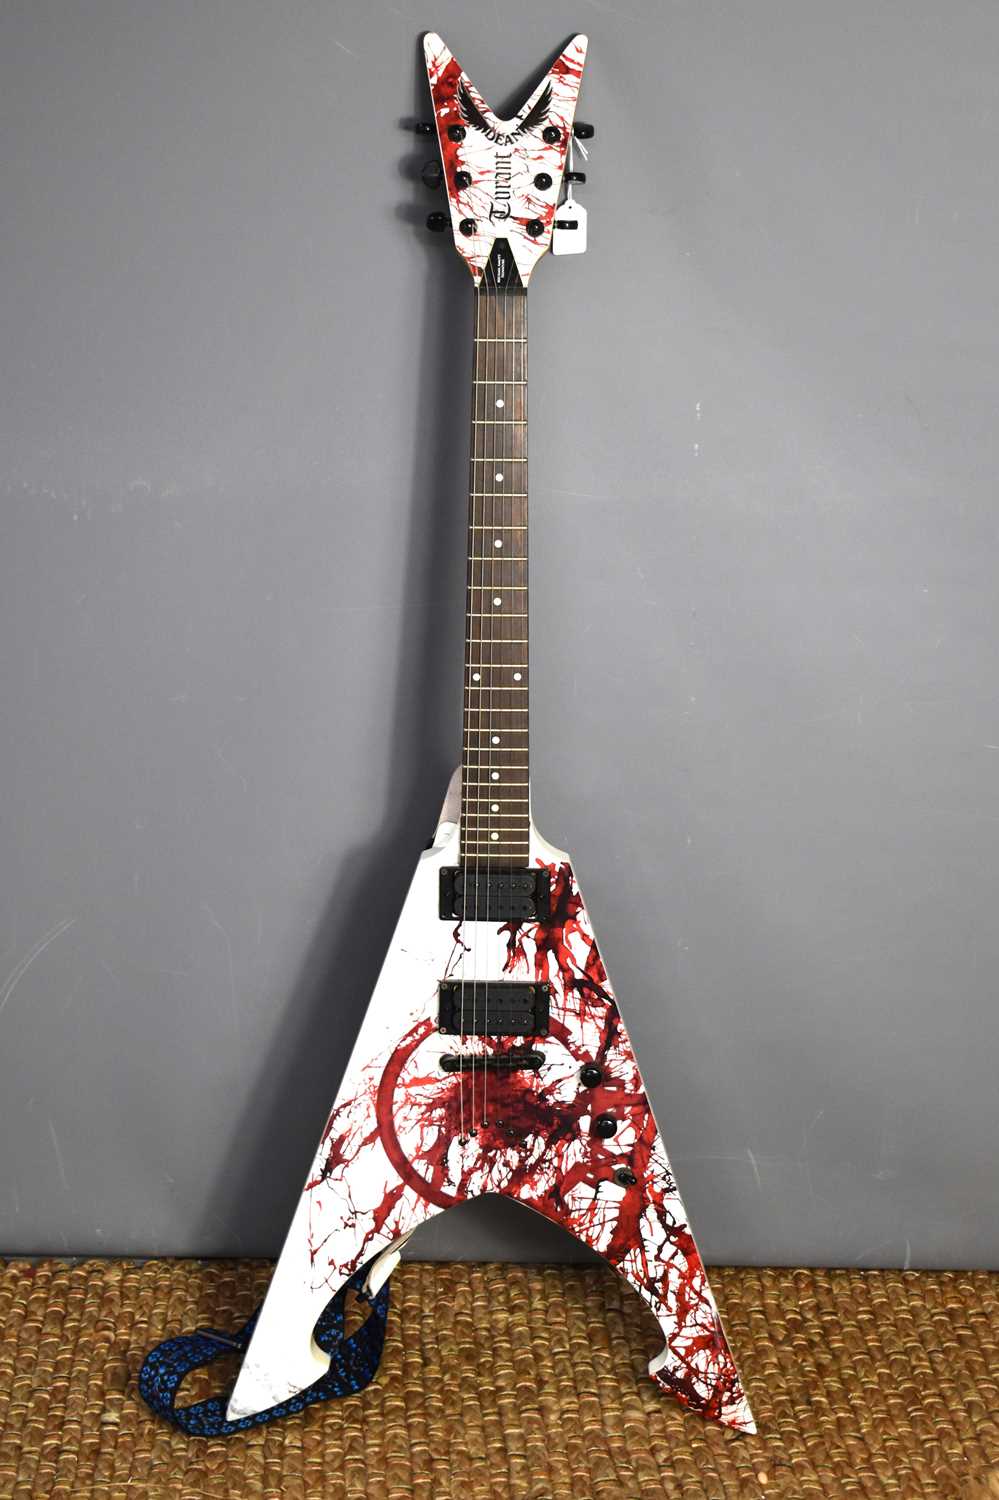 A Dean "Michael Amott Tyrant X Splatter" signature electric guitar, mahogany body with maple neck,